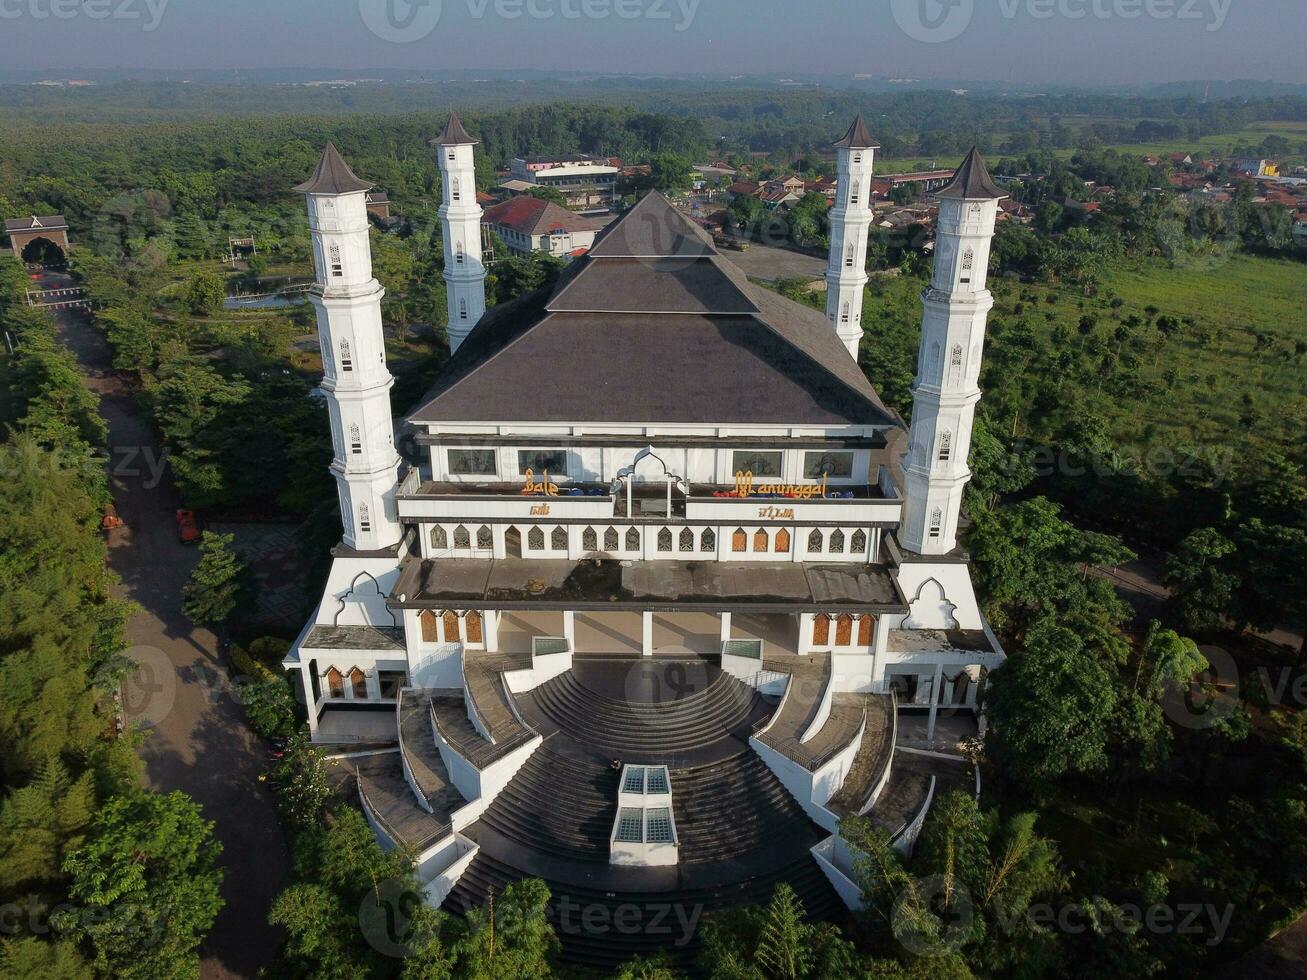 purwakarta, 05 mei 2023 - antenne foto van de moskee tajug gede cilodong purwakarta in de ochtend, genomen gebruik makend van de dar dji mavic mini 2